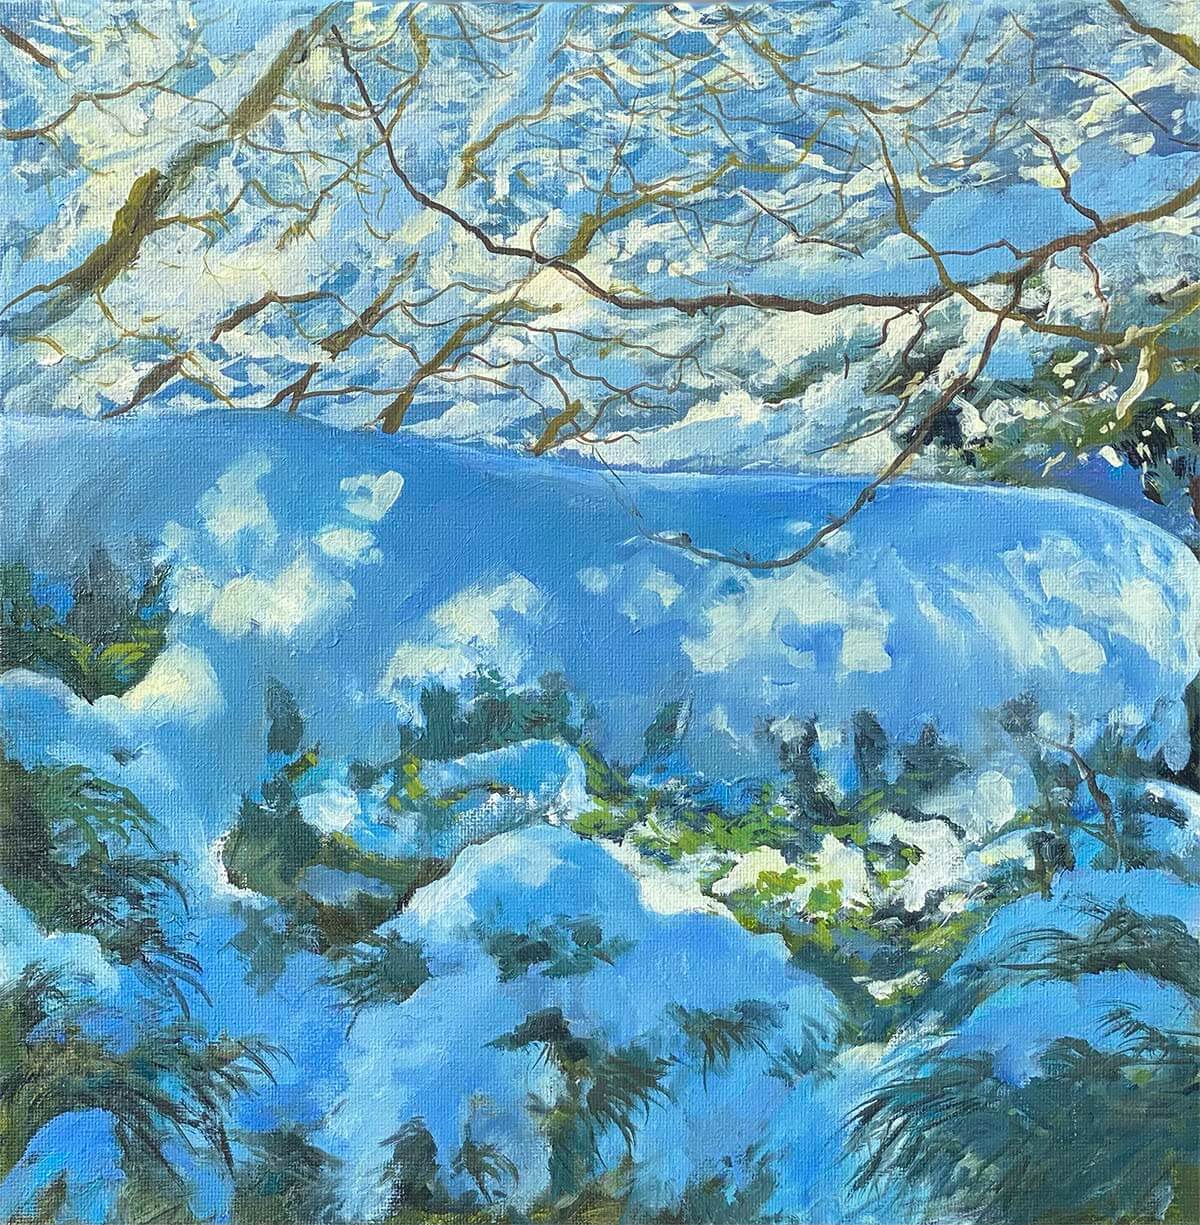 Winter Landscape in BC